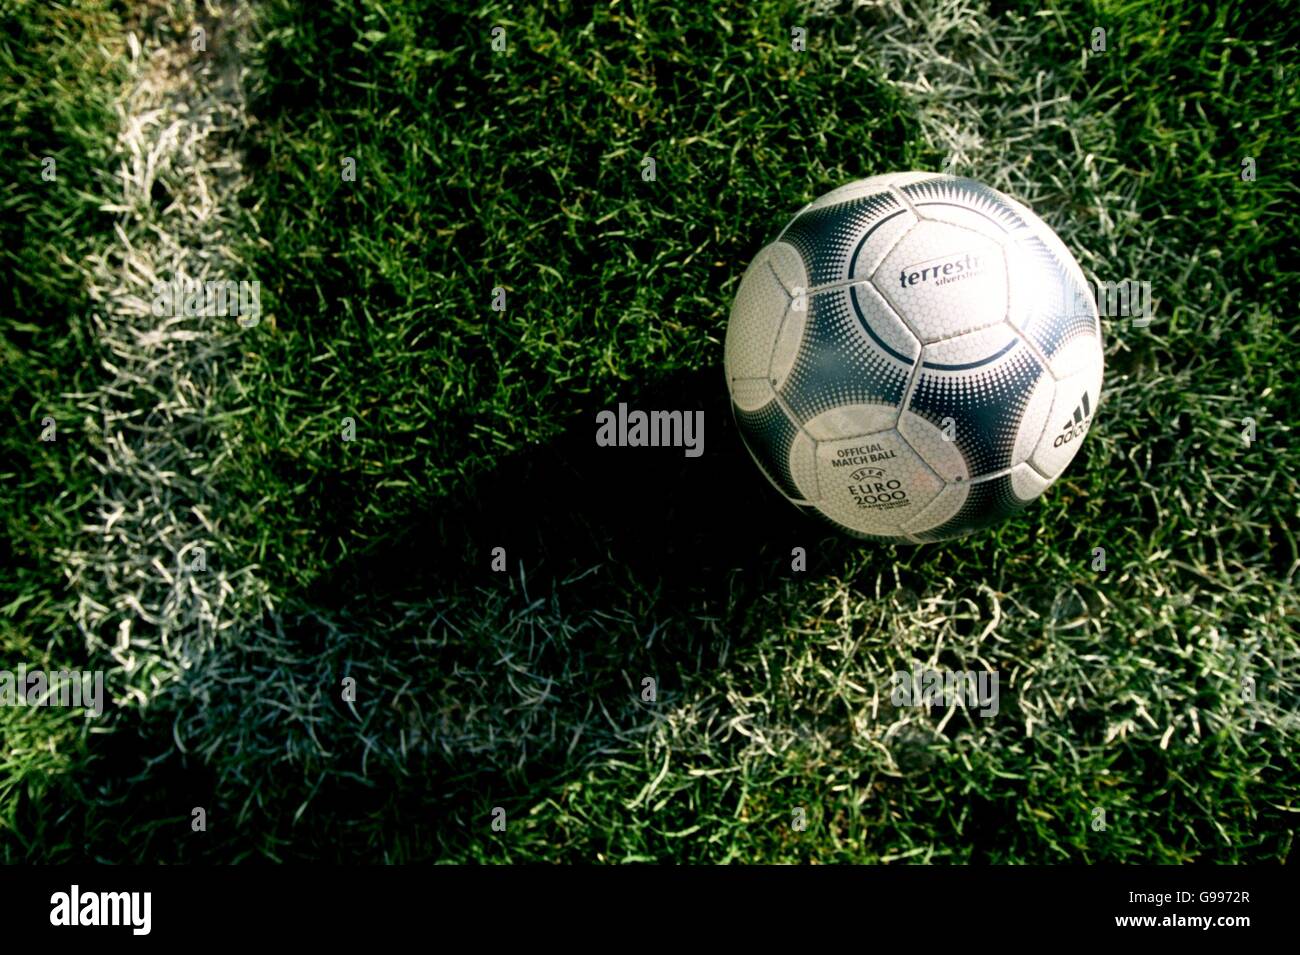 Soccer - New Adidas ball for Euro 2000 - Adidas Terrestra Stock Photo Alamy